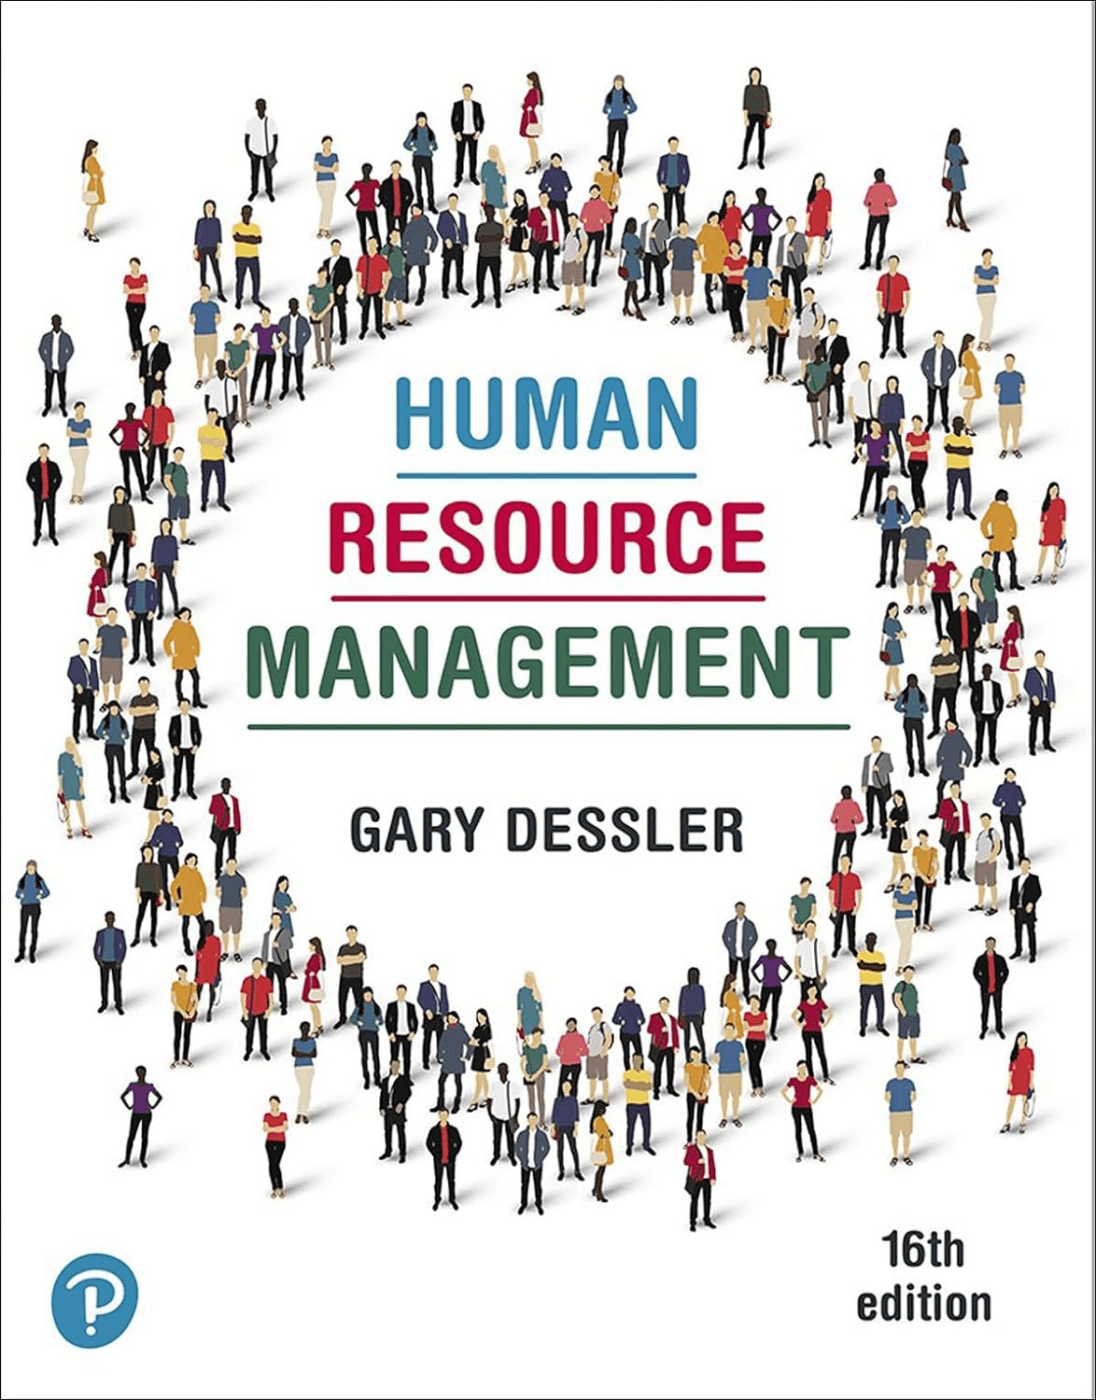 Human Resource Management by Gary Dessler 